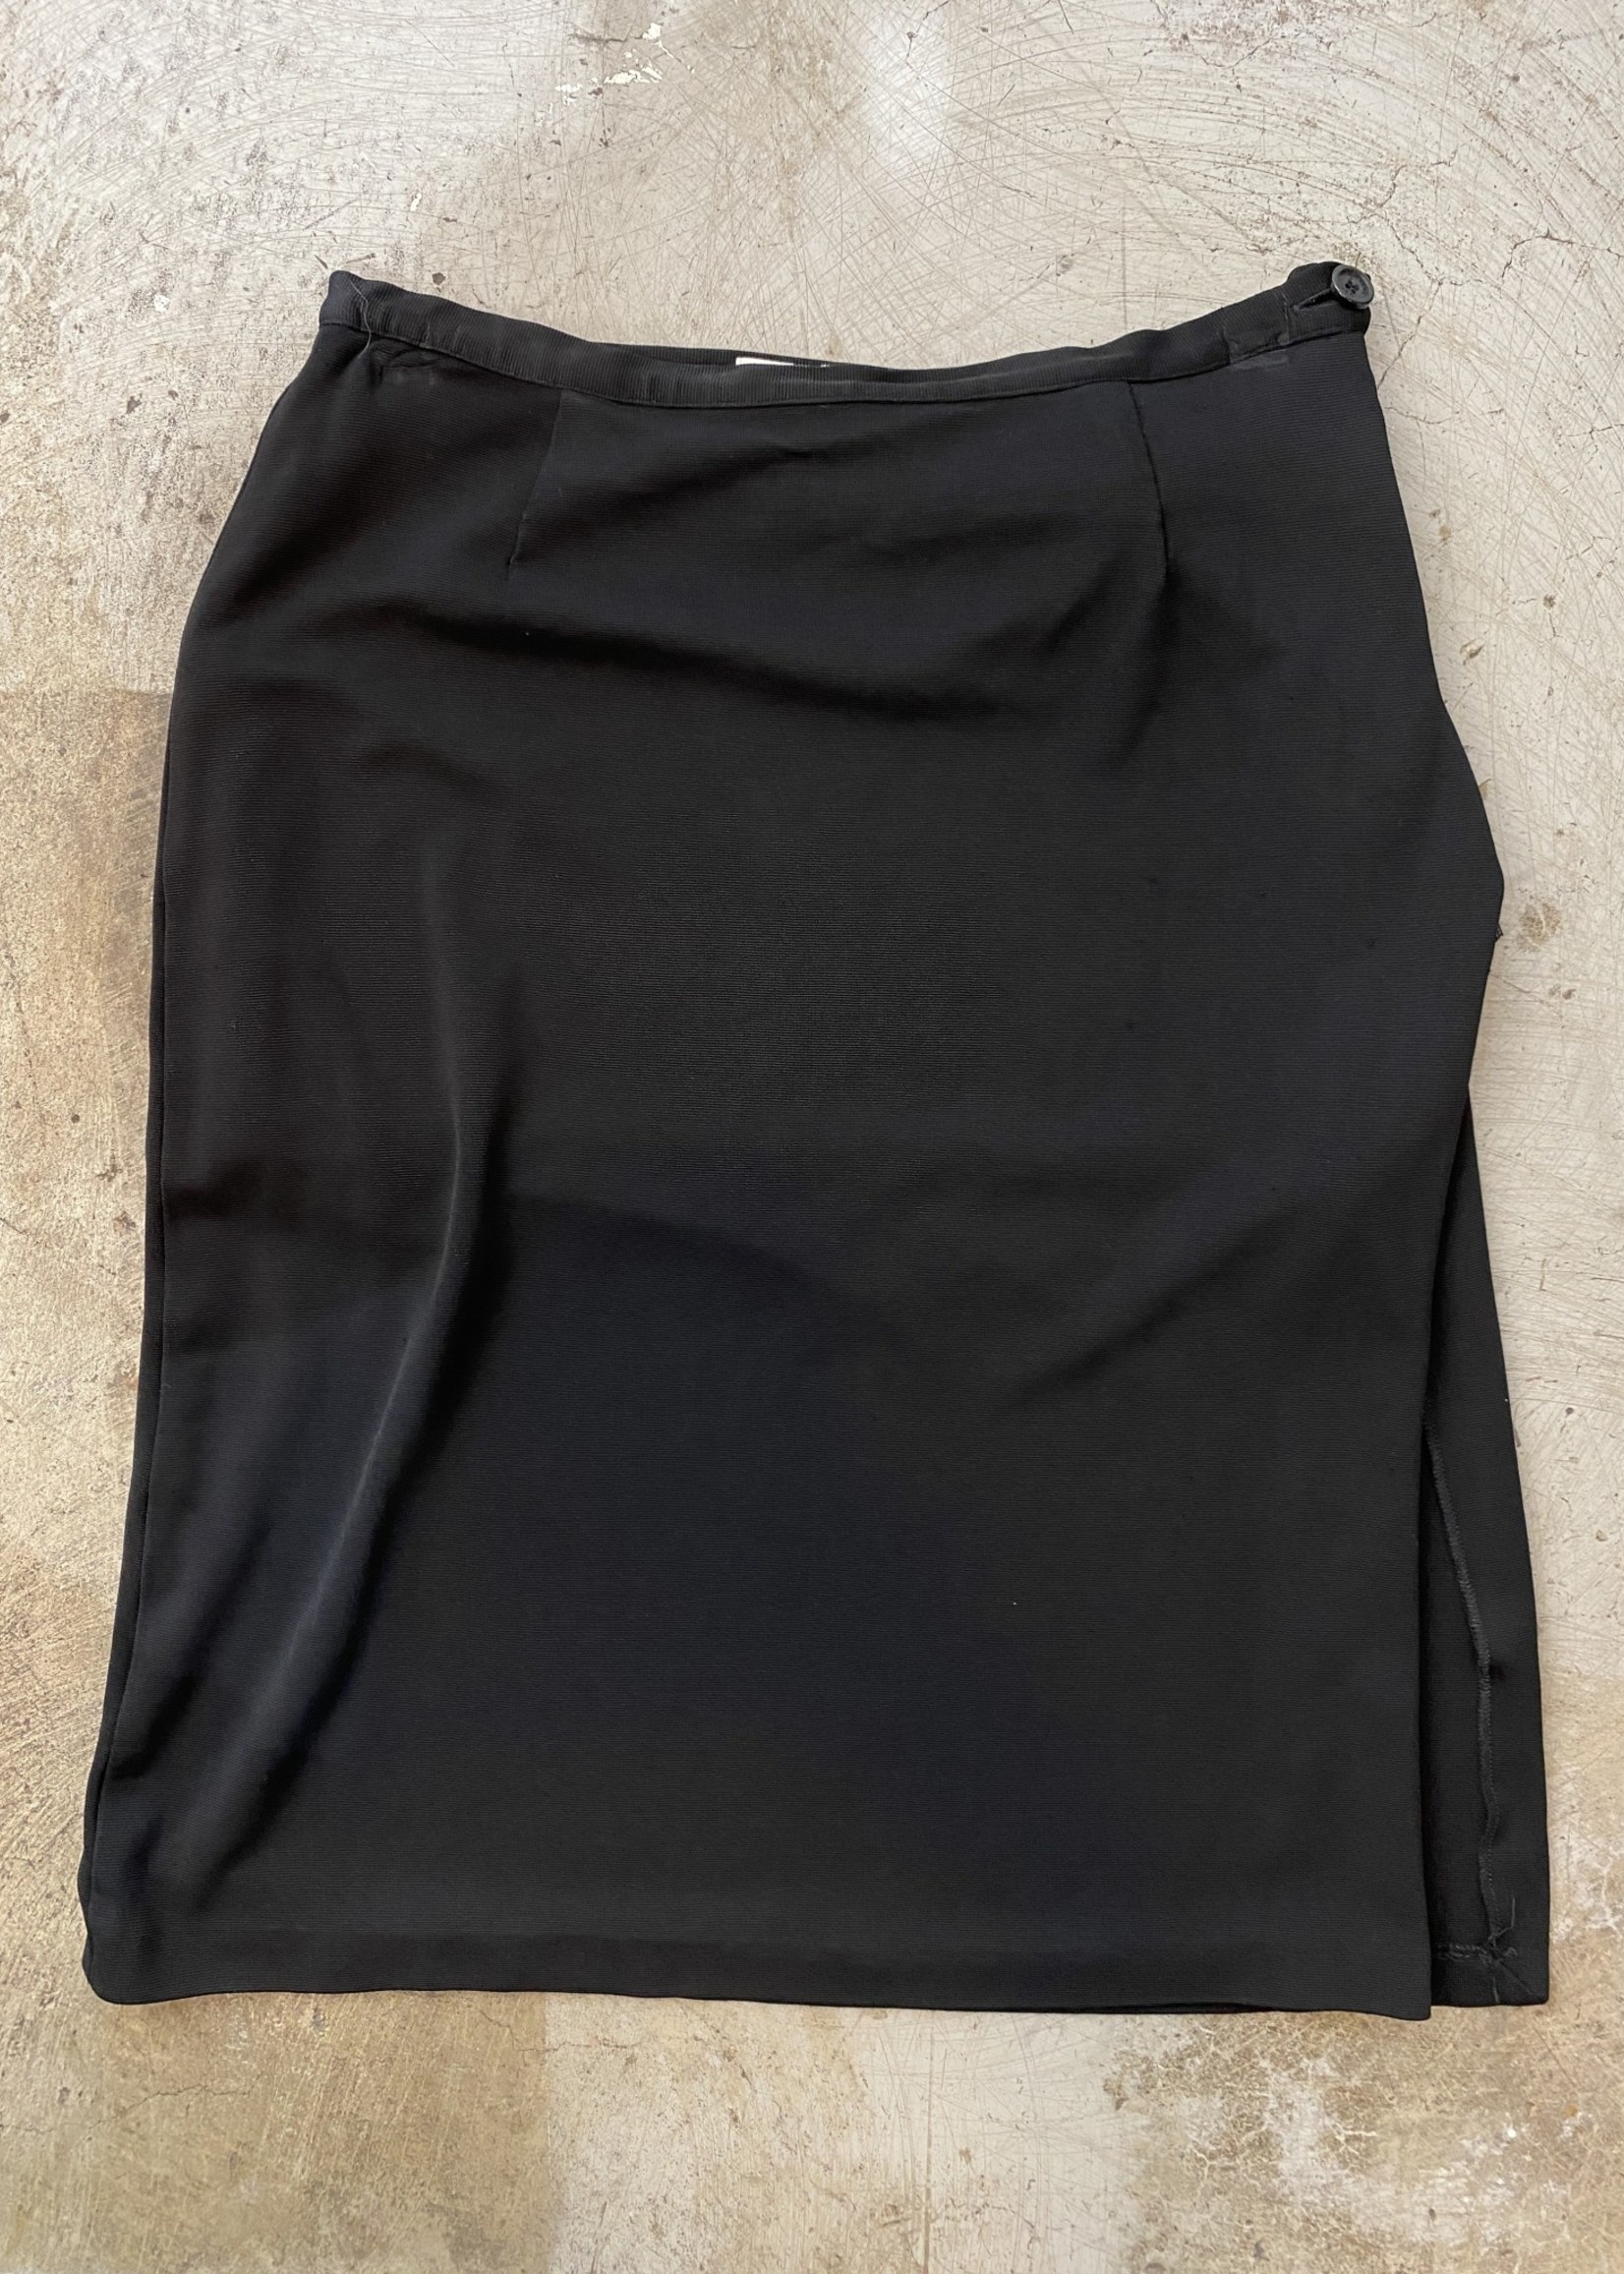 Y2K Dolce & Gabbana Black Skirt 26"/S